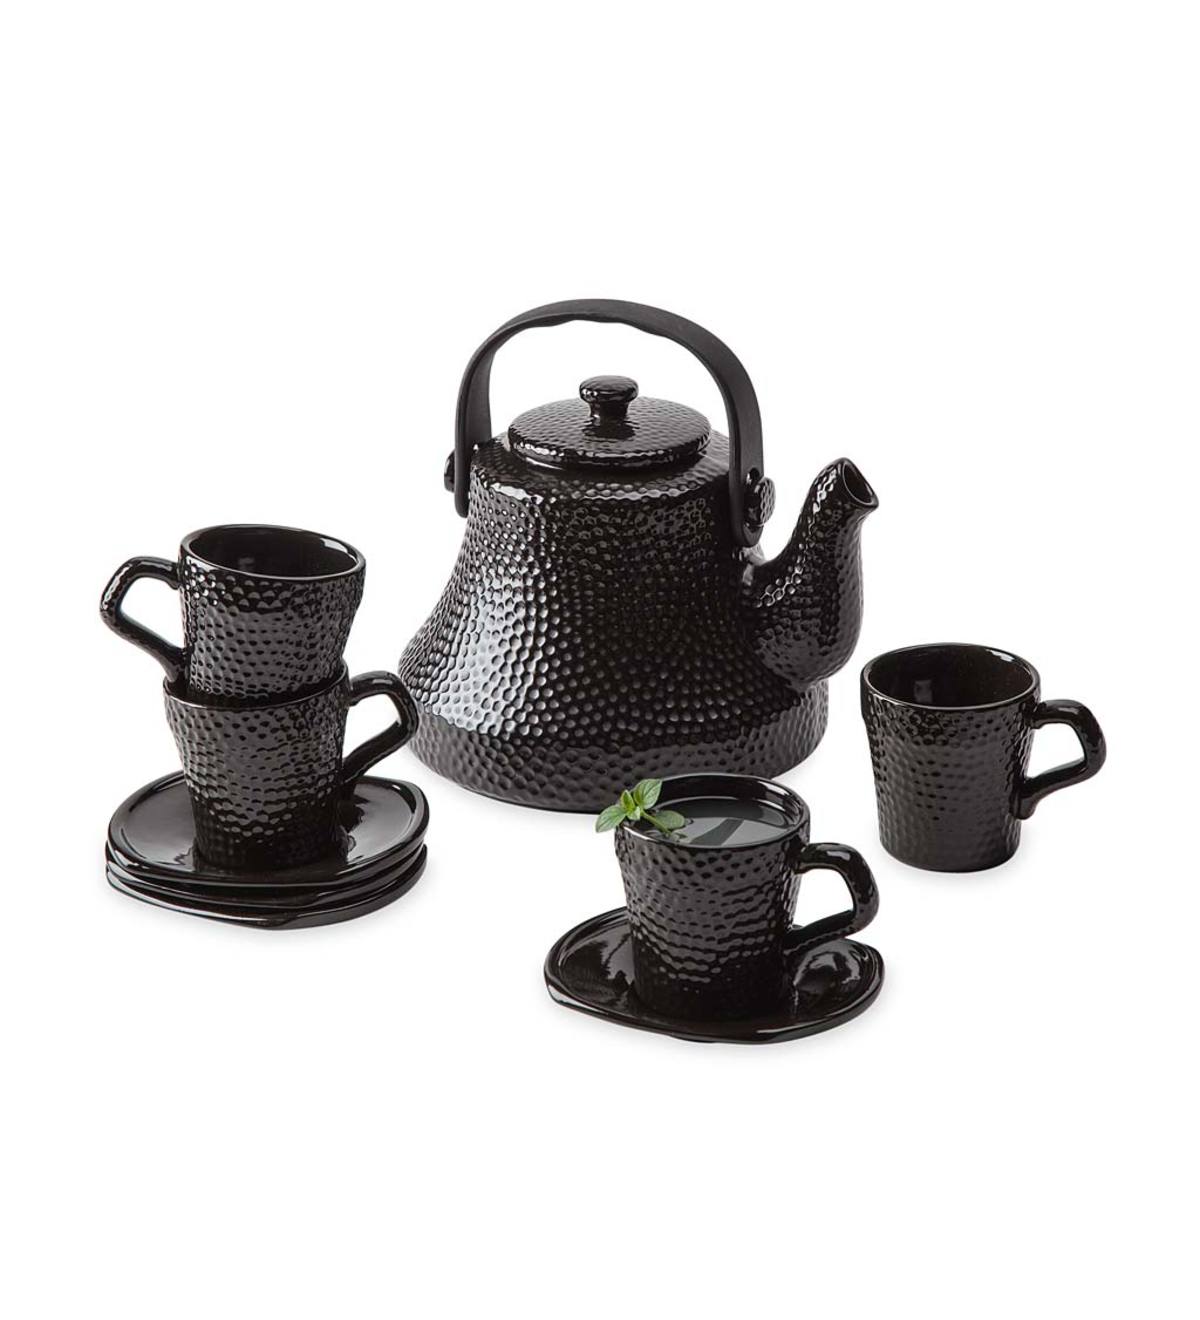 Ceraflame Ceramic Tea Kettle - Black